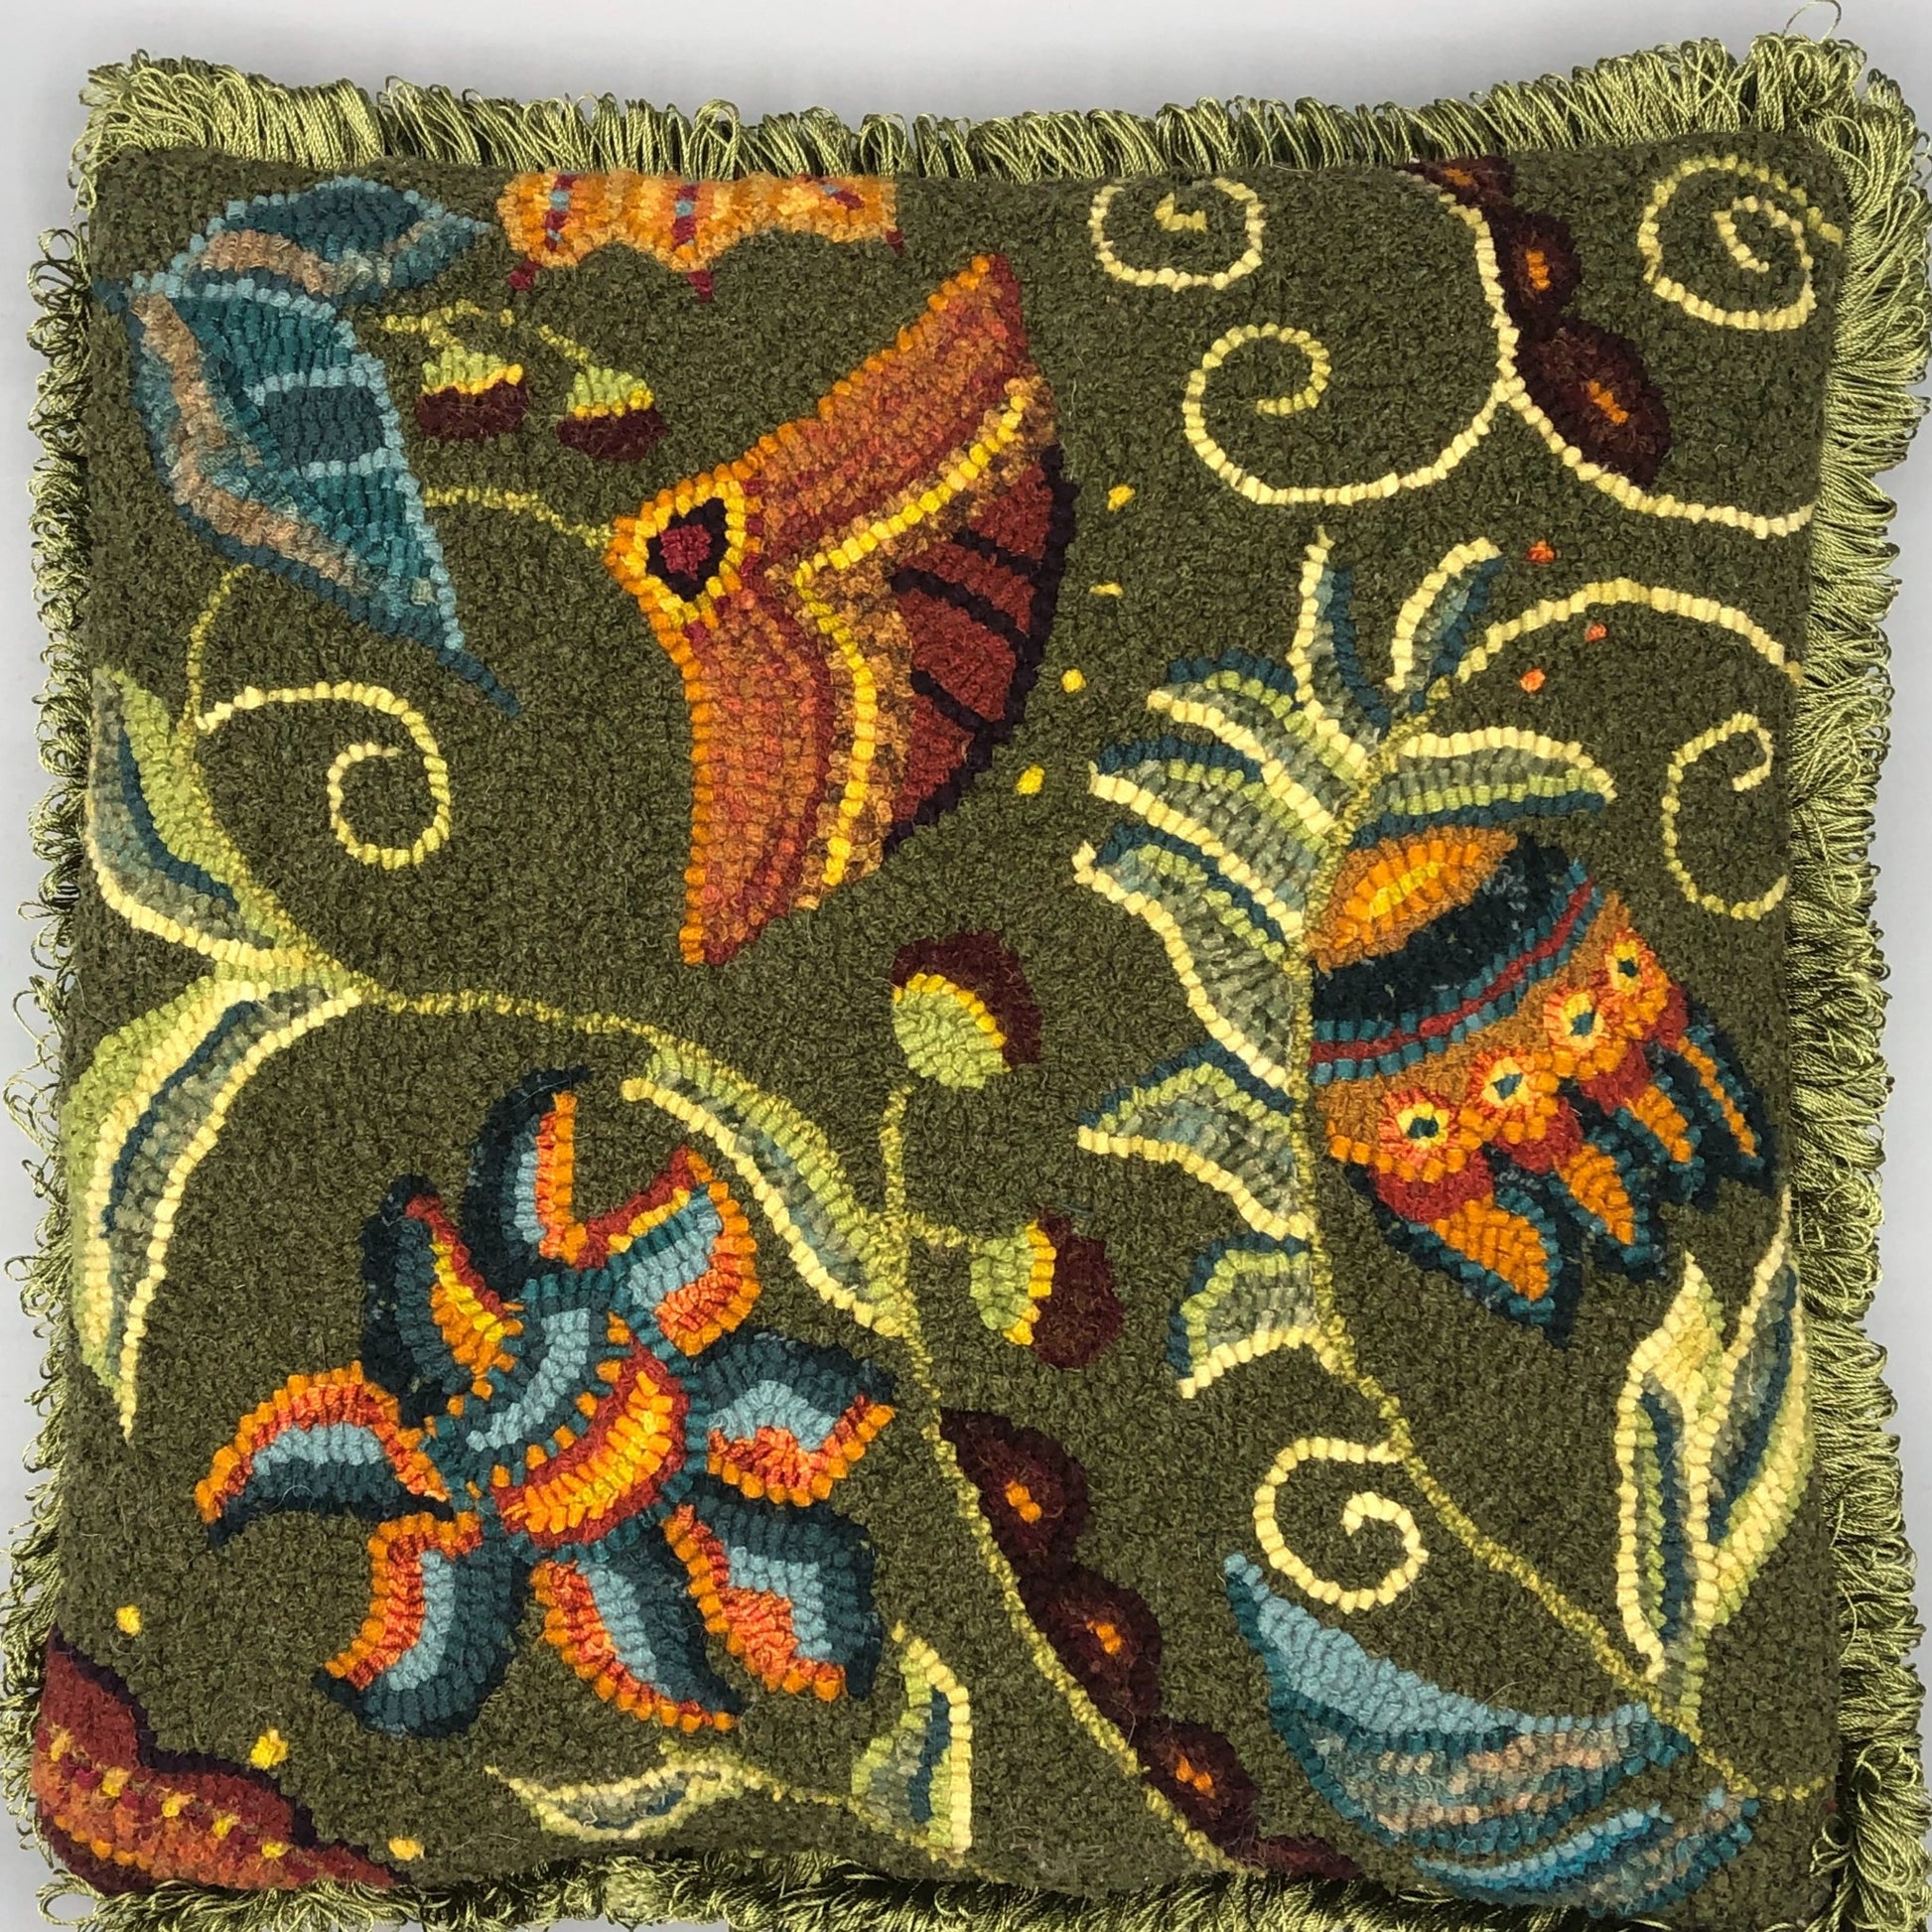 Awakening 1414 -Rug Hooking Pattern on Linen, By Orphaned Wool